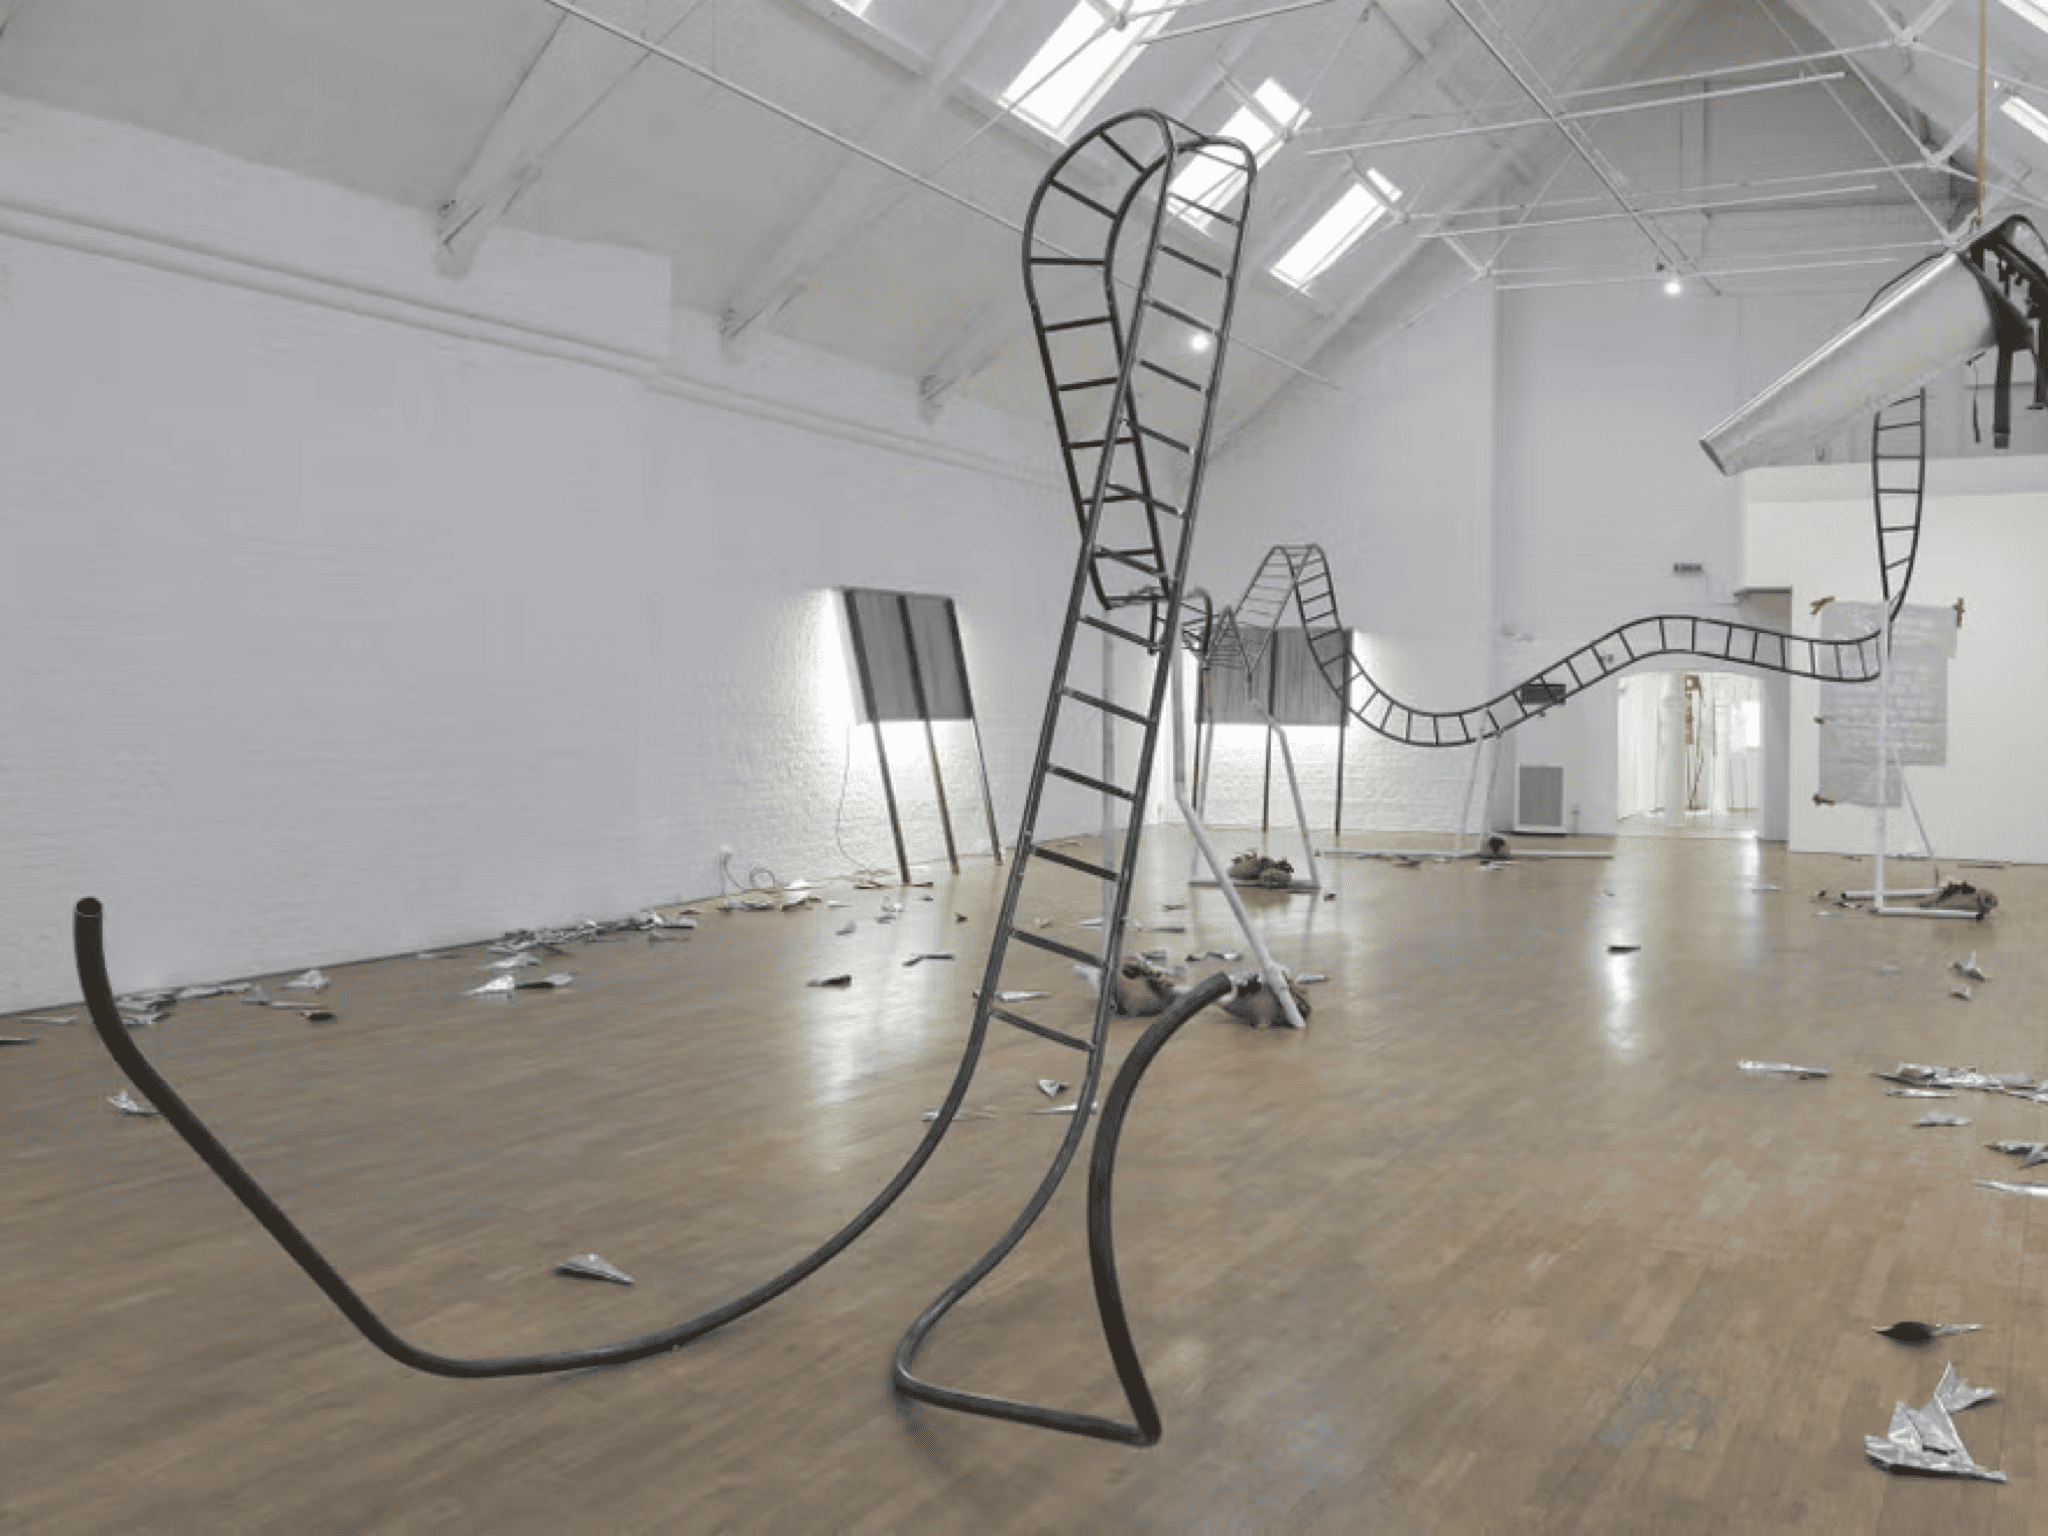 Freestanding twisting metal stair in a white sunlit room.